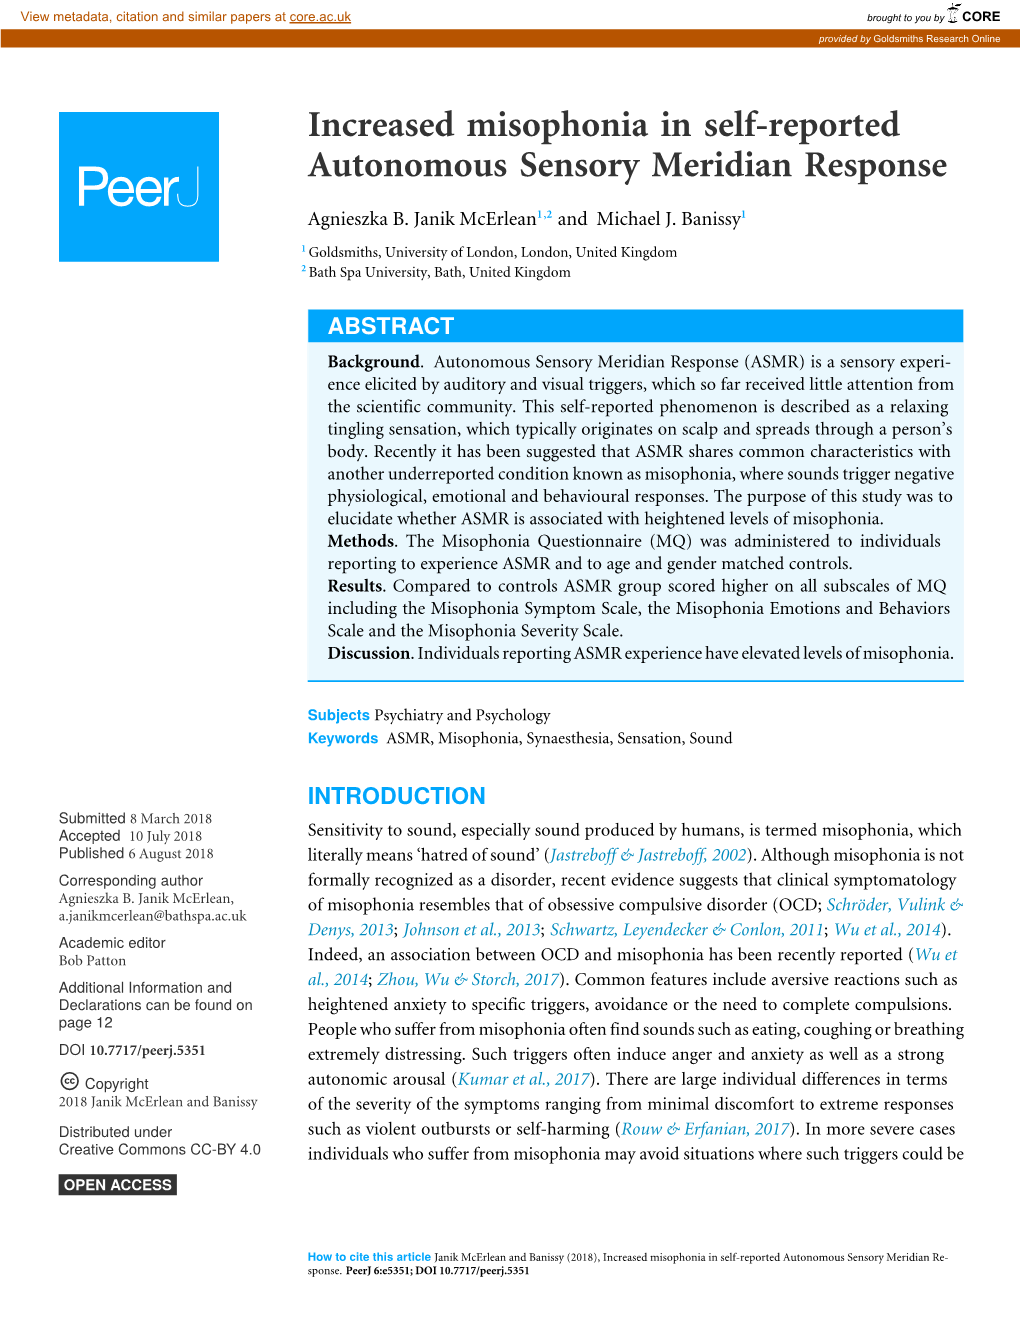 Increased Misophonia in Self-Reported Autonomous Sensory Meridian Response